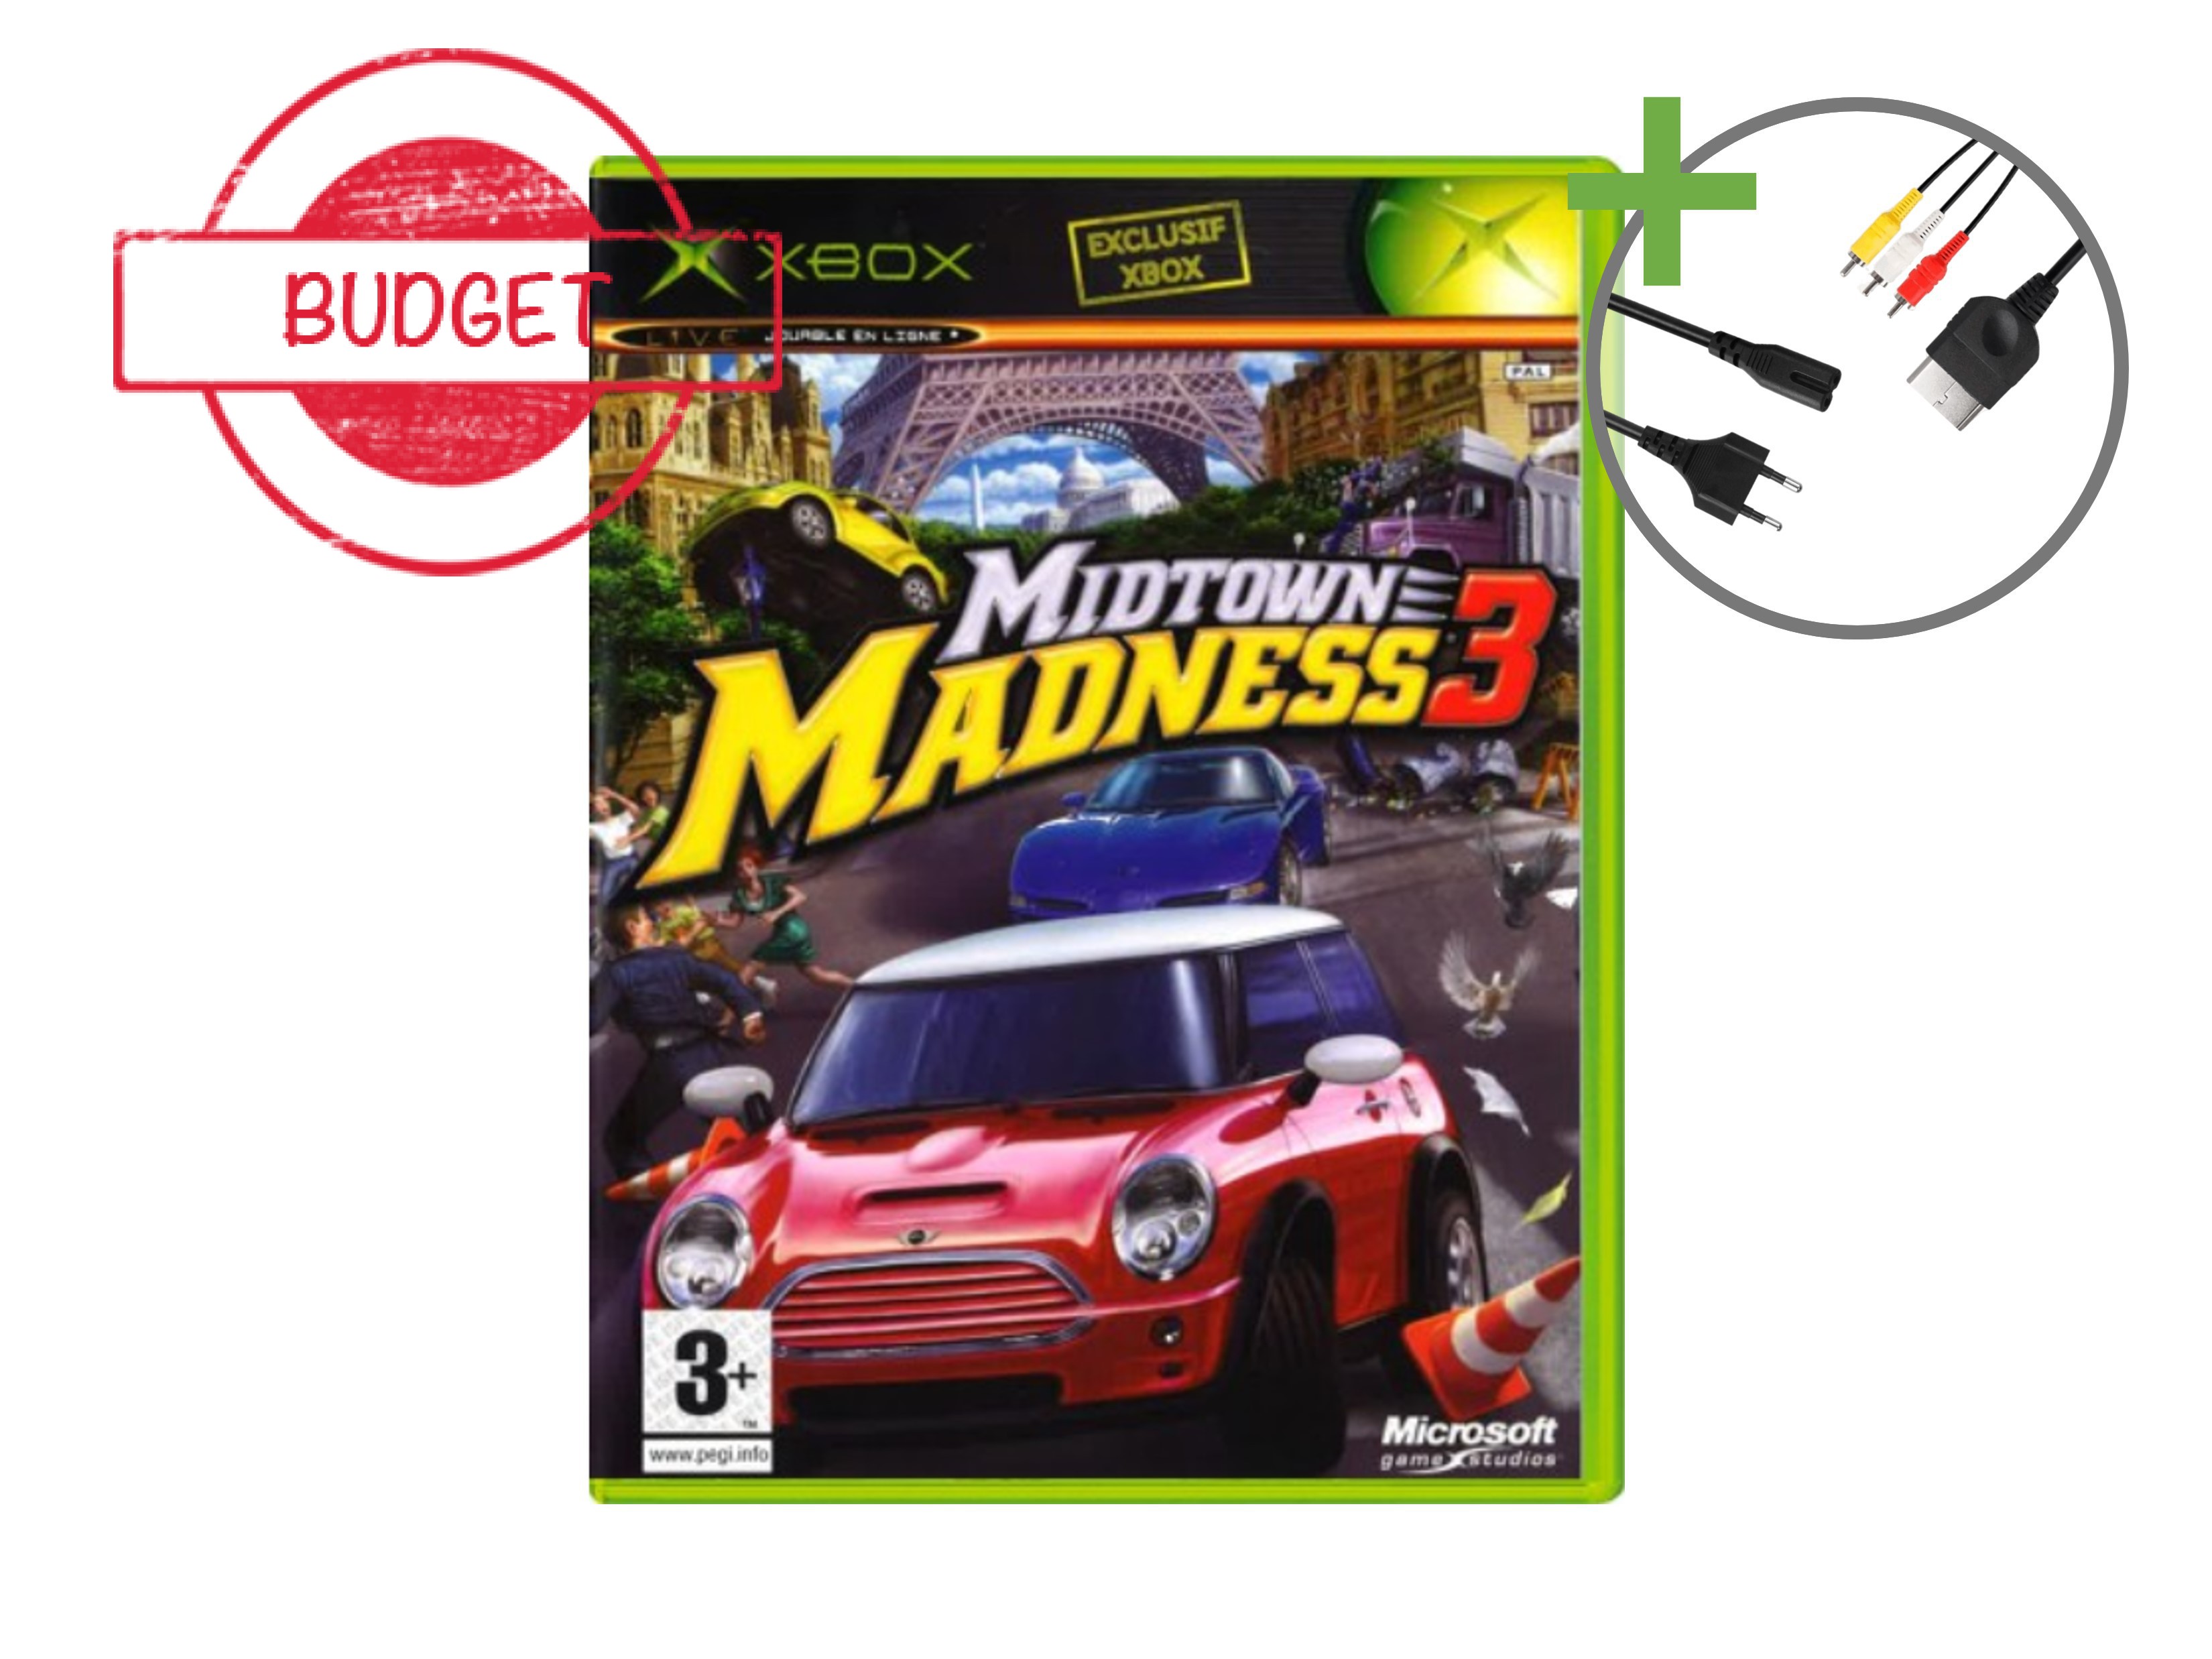 Microsoft Xbox Classic Starter Pack - Midtown Madness 3 Edition - Budget - Xbox Original Hardware - 4